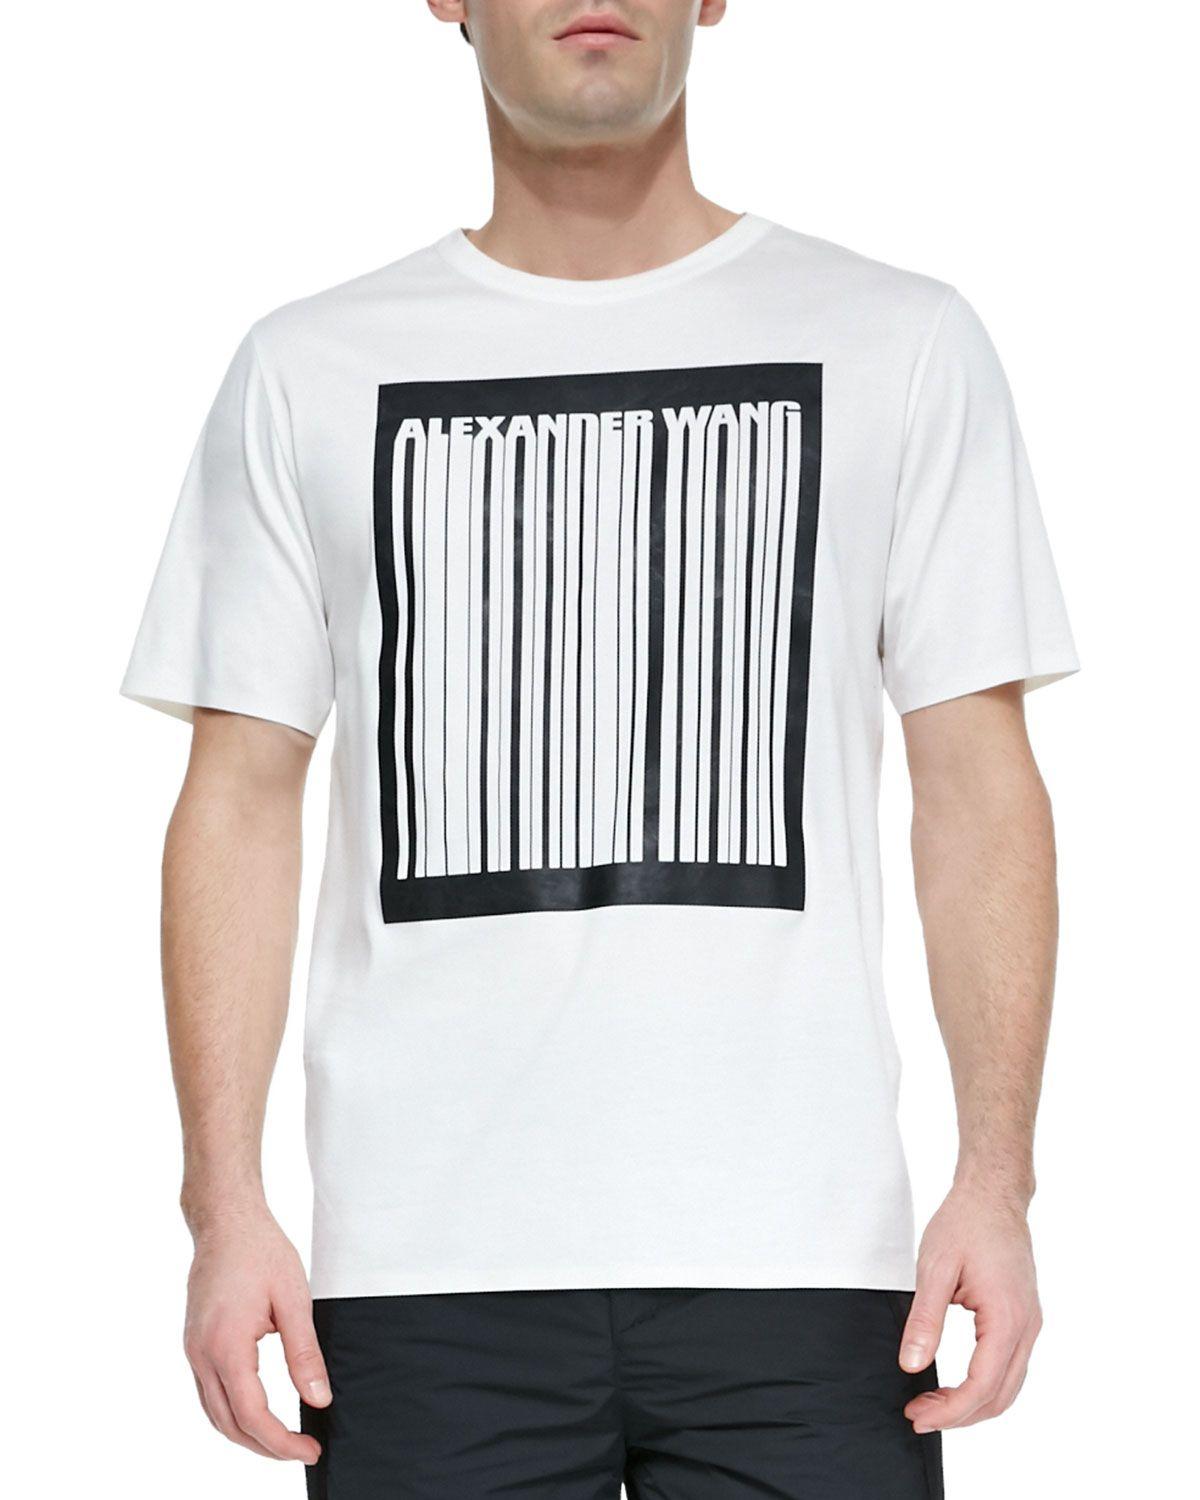 Alexander Wang Logo - Lyst Wang Bonded Barcode Logo Tee Shirt in White